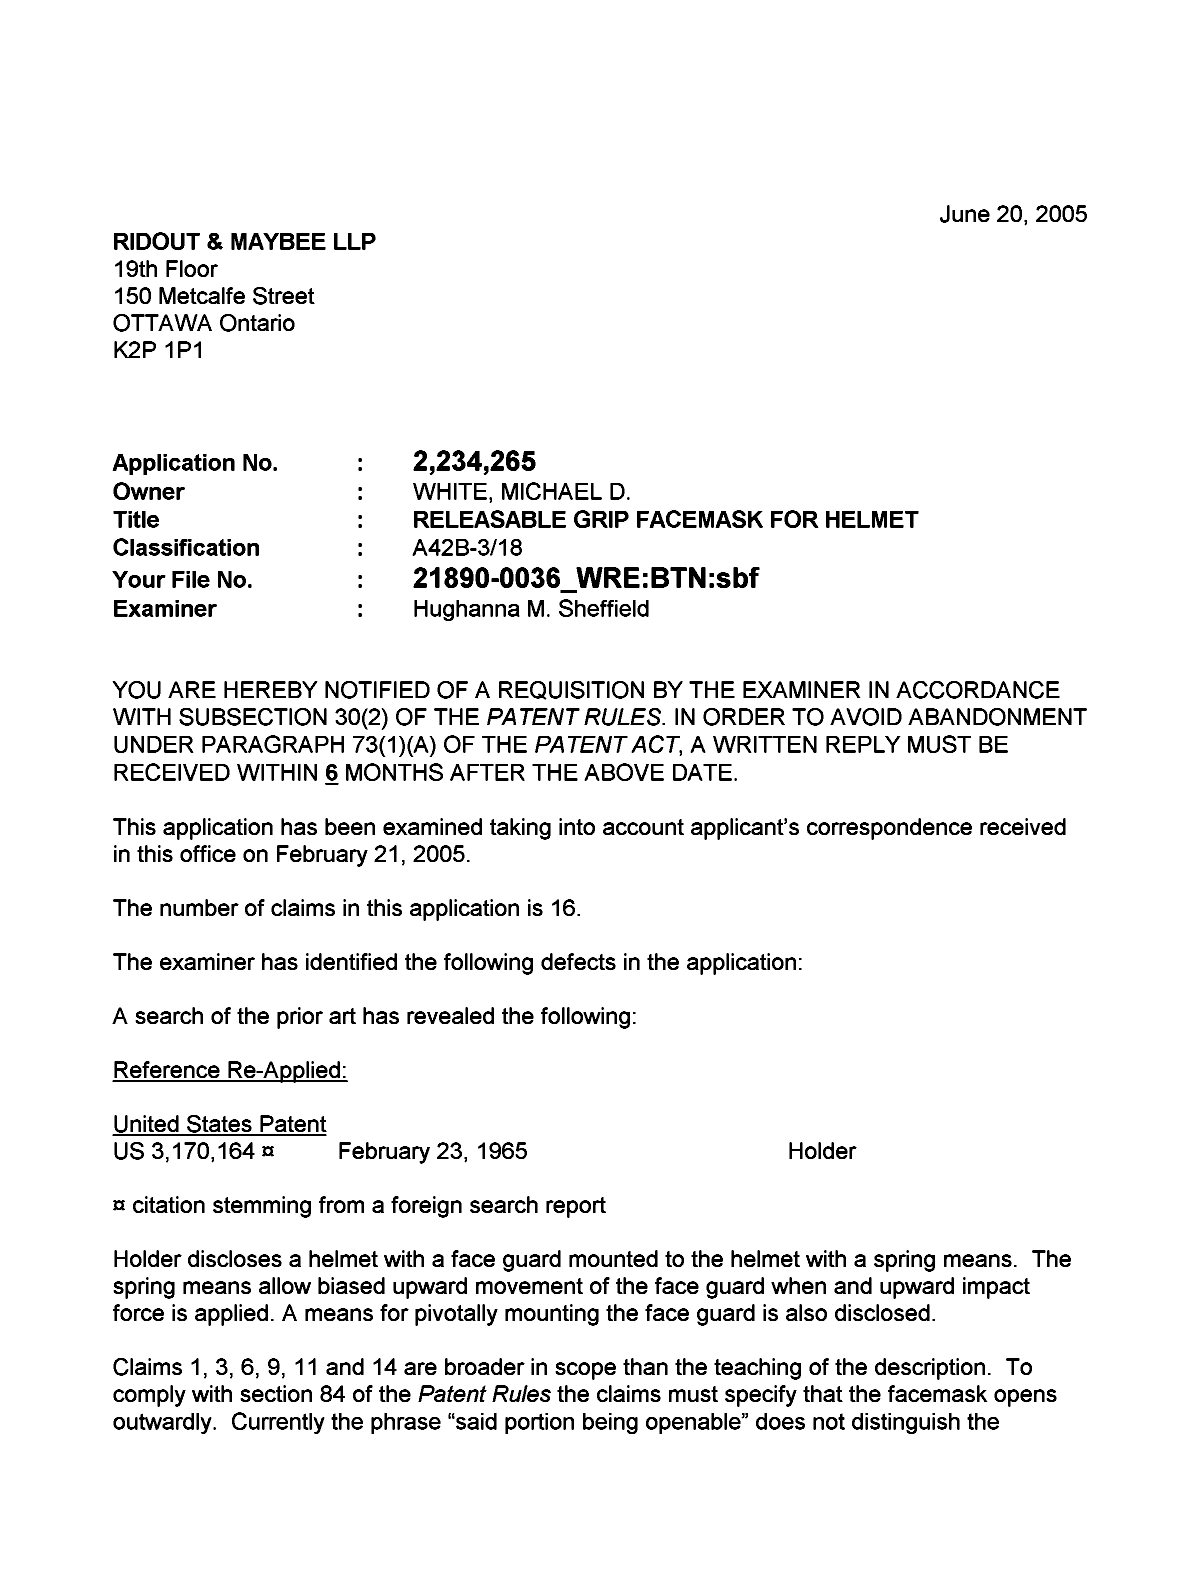 Canadian Patent Document 2234265. Prosecution-Amendment 20050620. Image 1 of 2